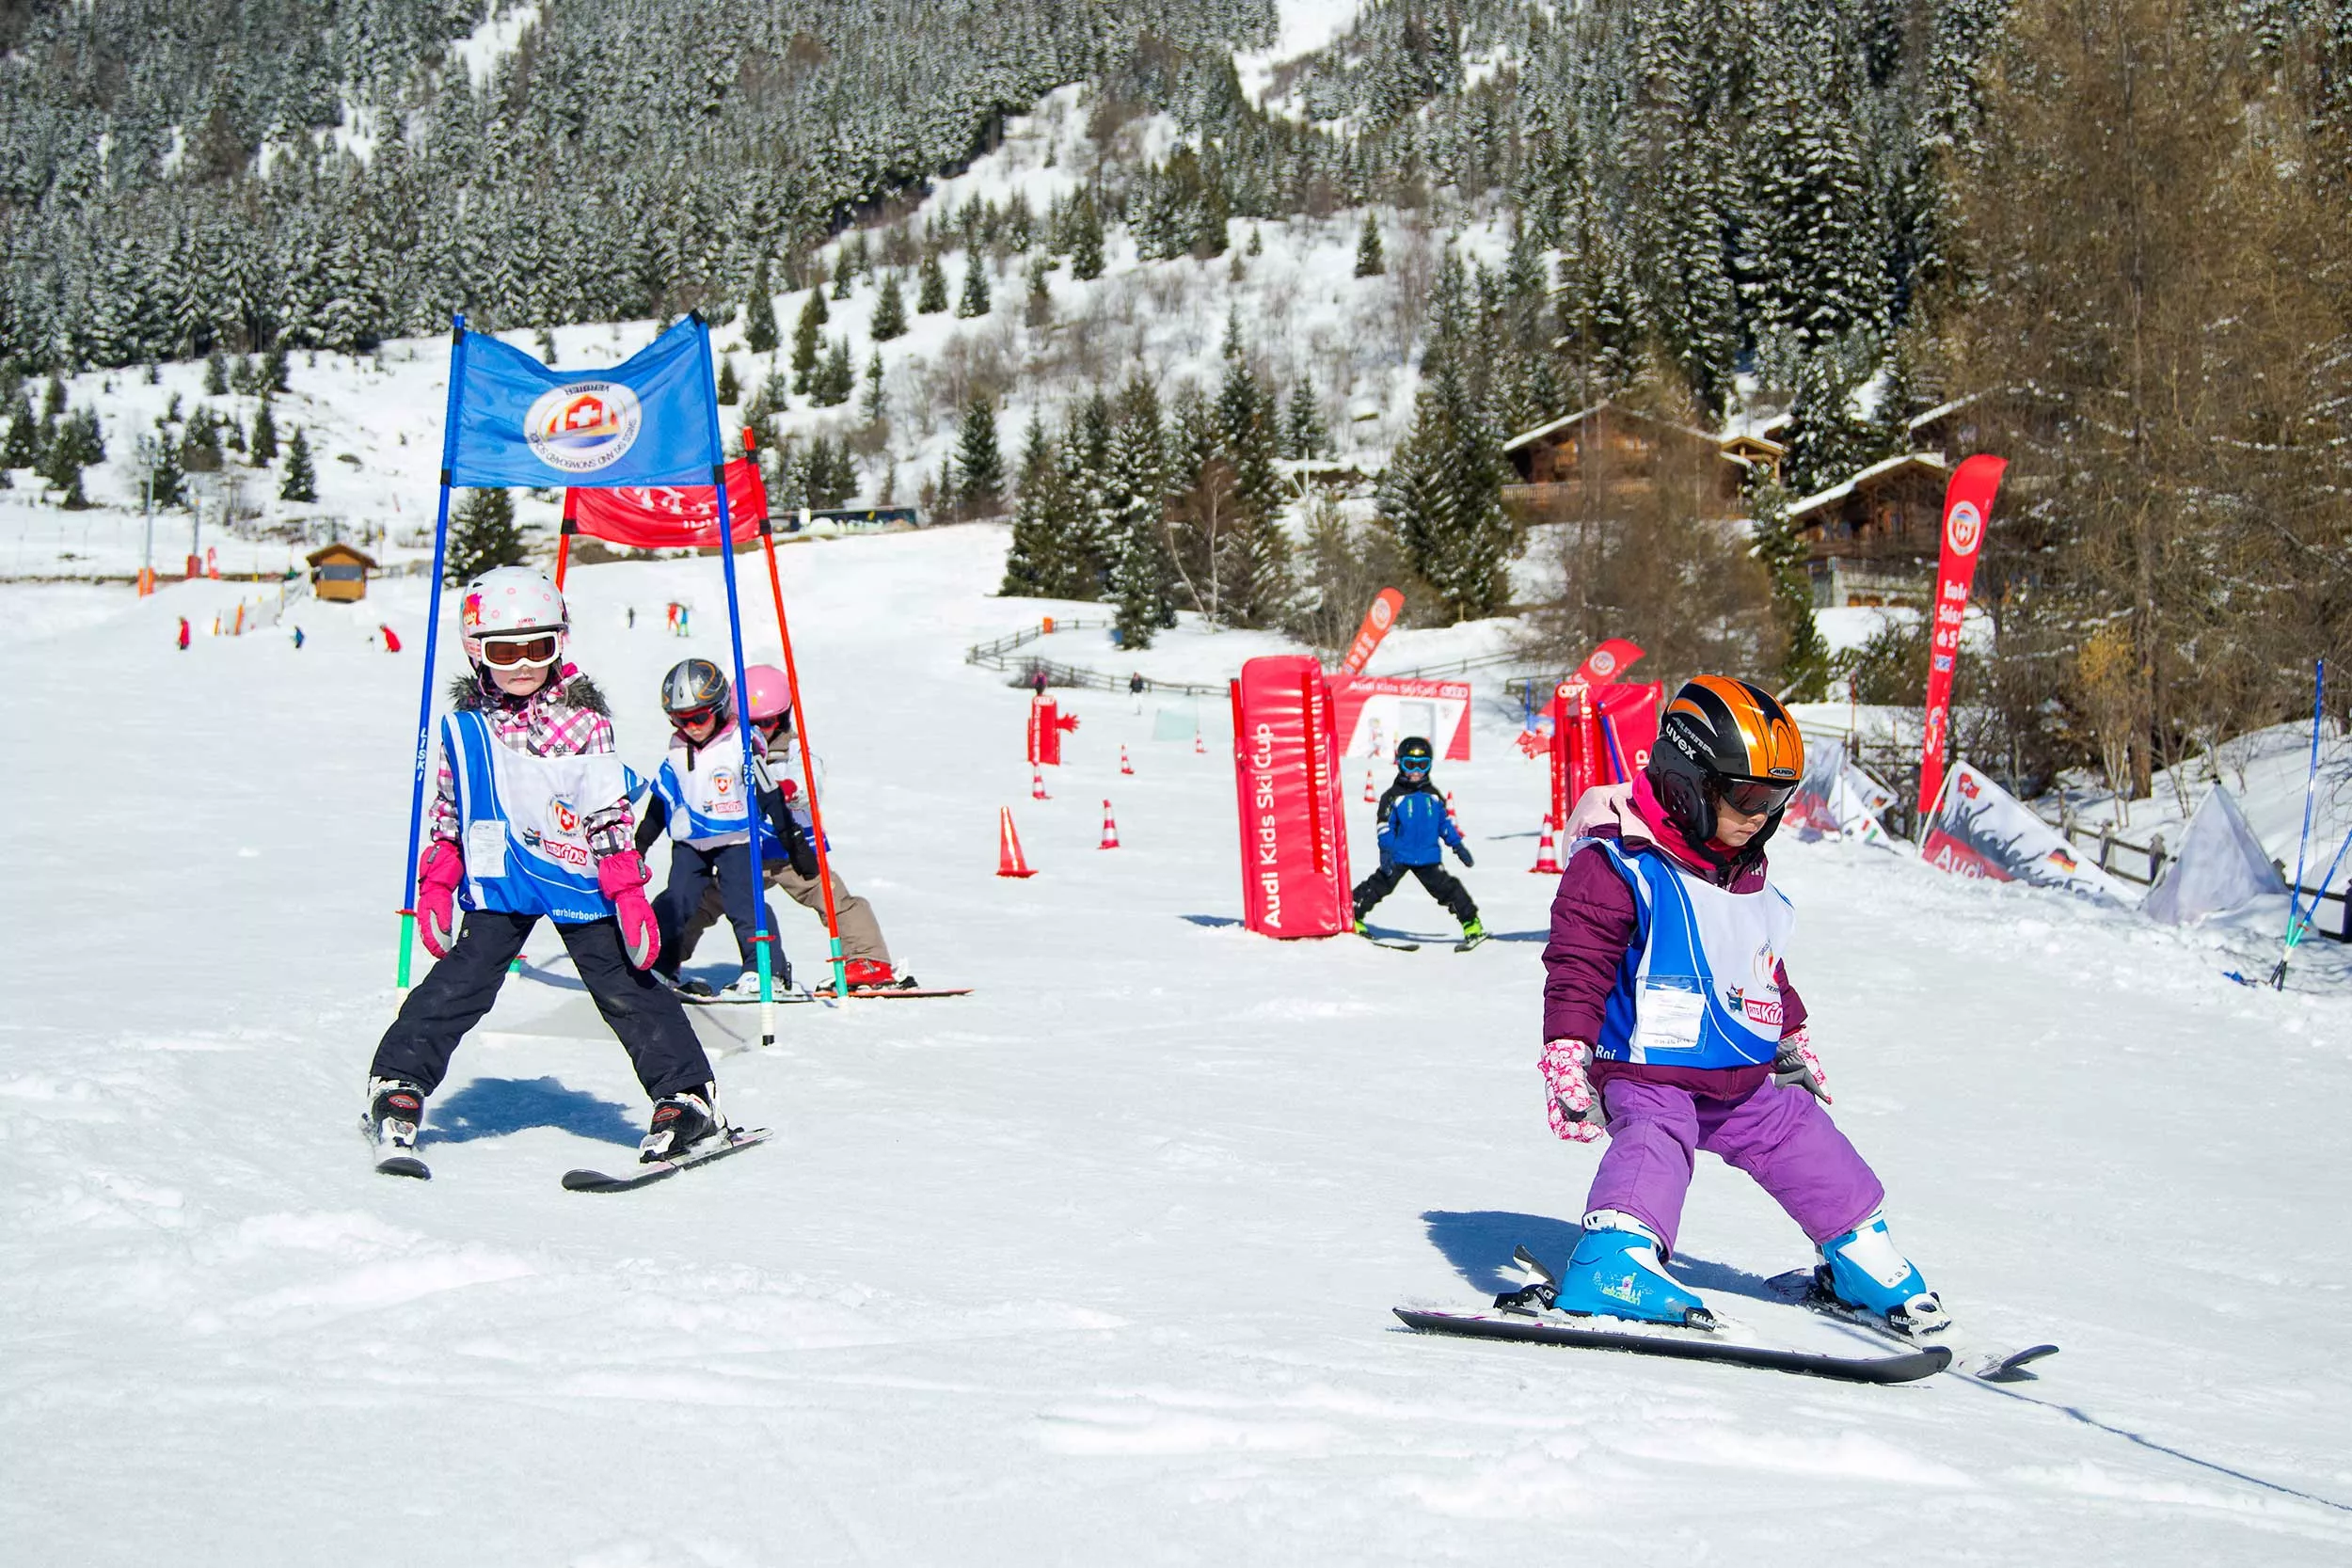 Swissrent Quattro in Switzerland, Europe | Snowboarding,Skiing - Rated 3.8